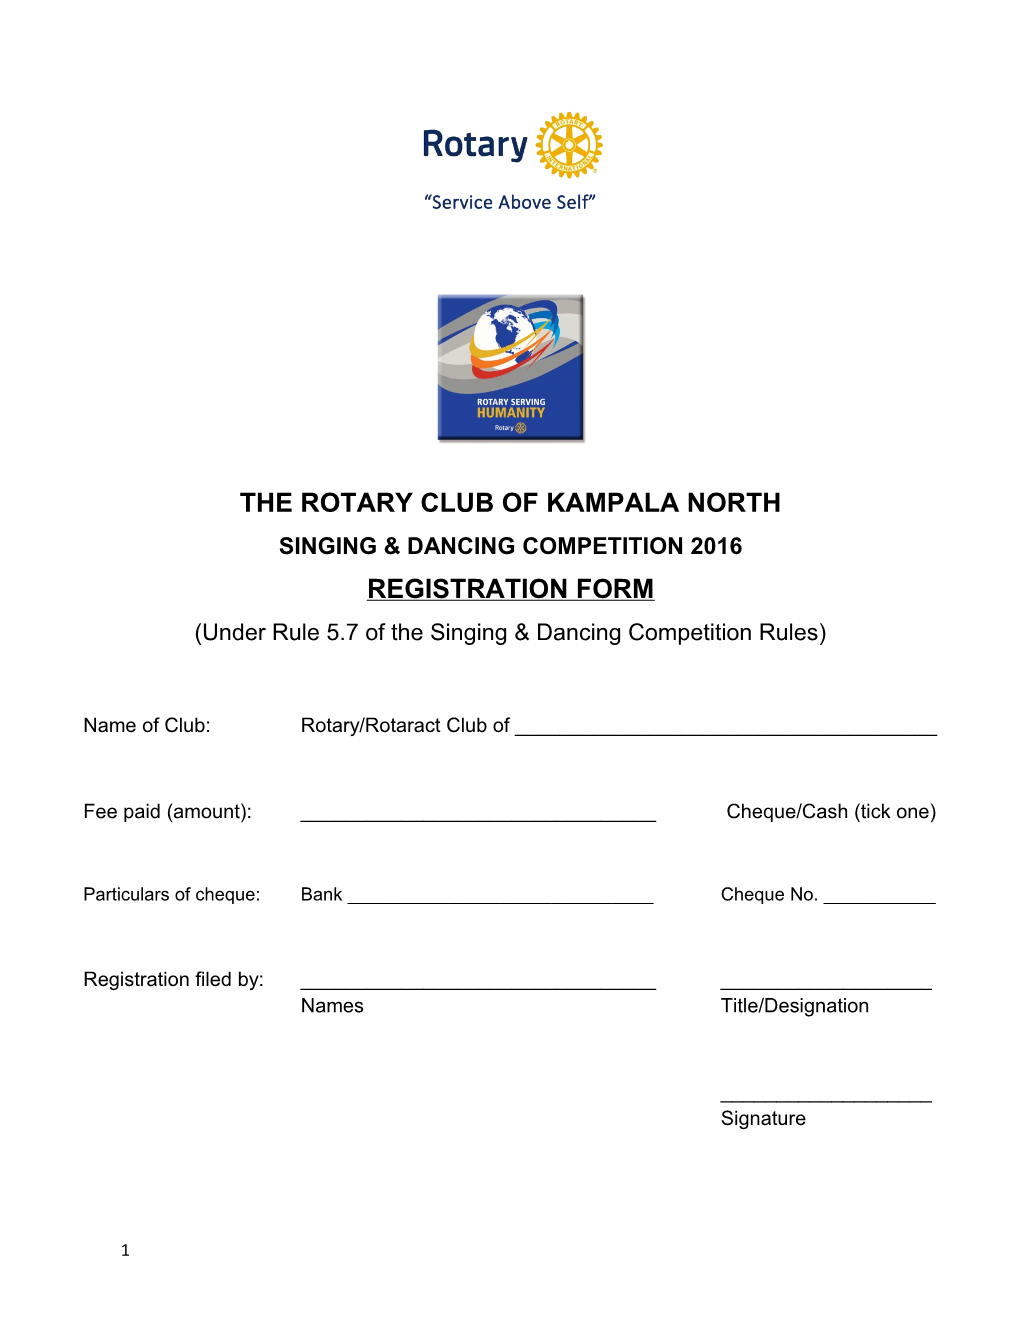 The Rotary Club of Kampala North